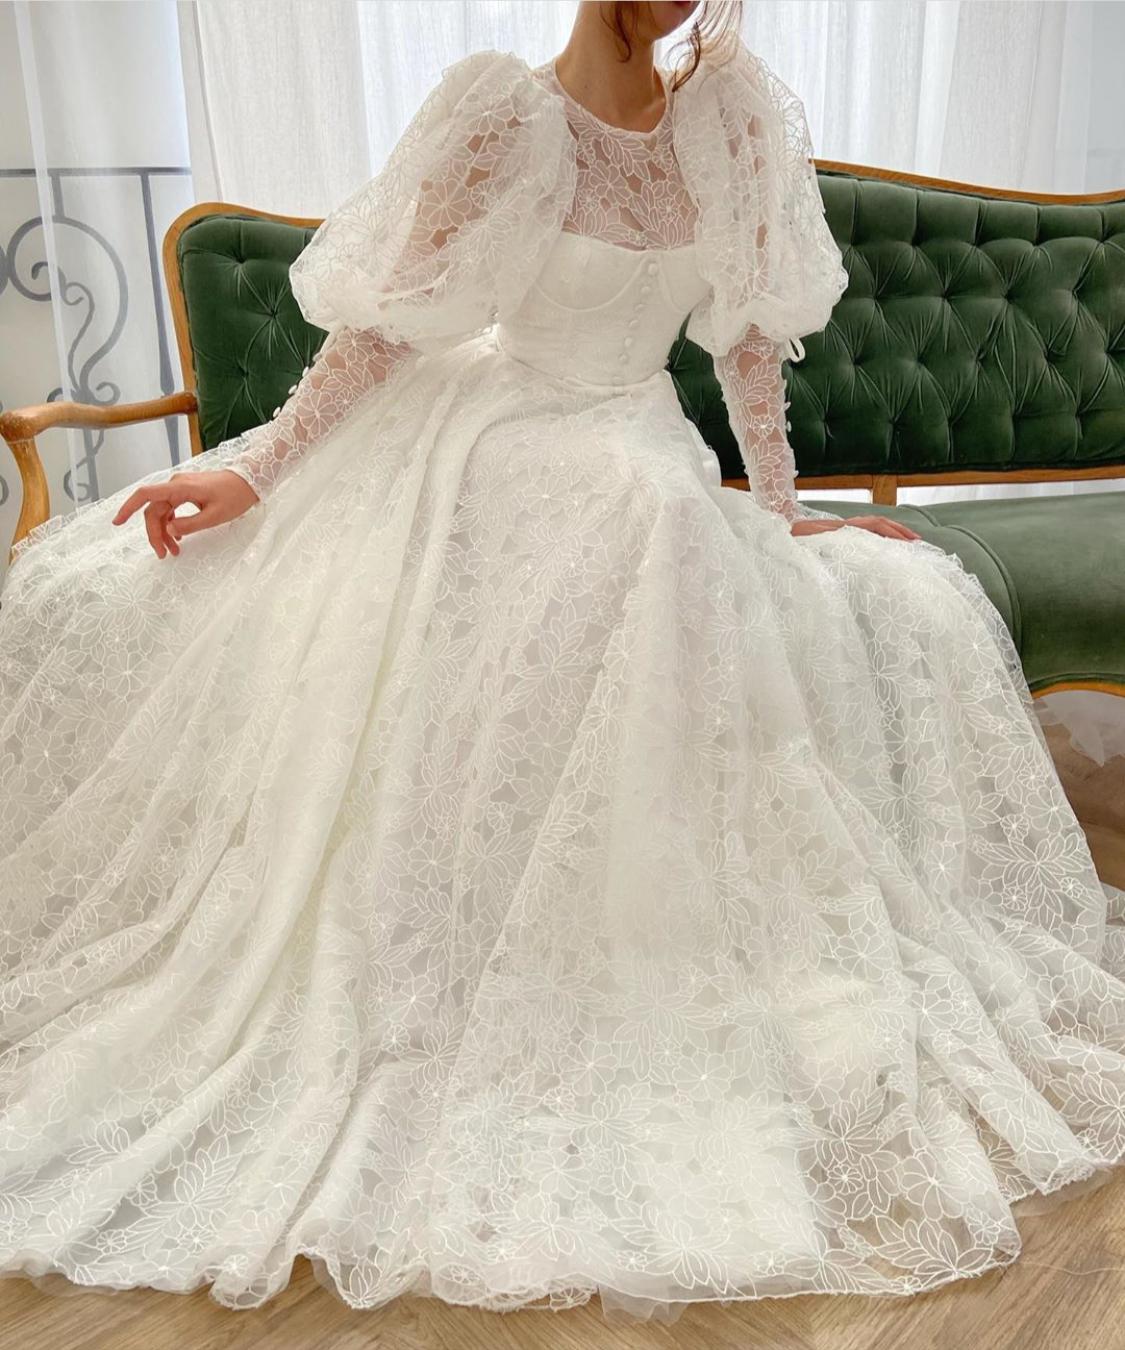 Anemone Fantasy Bridal Gown